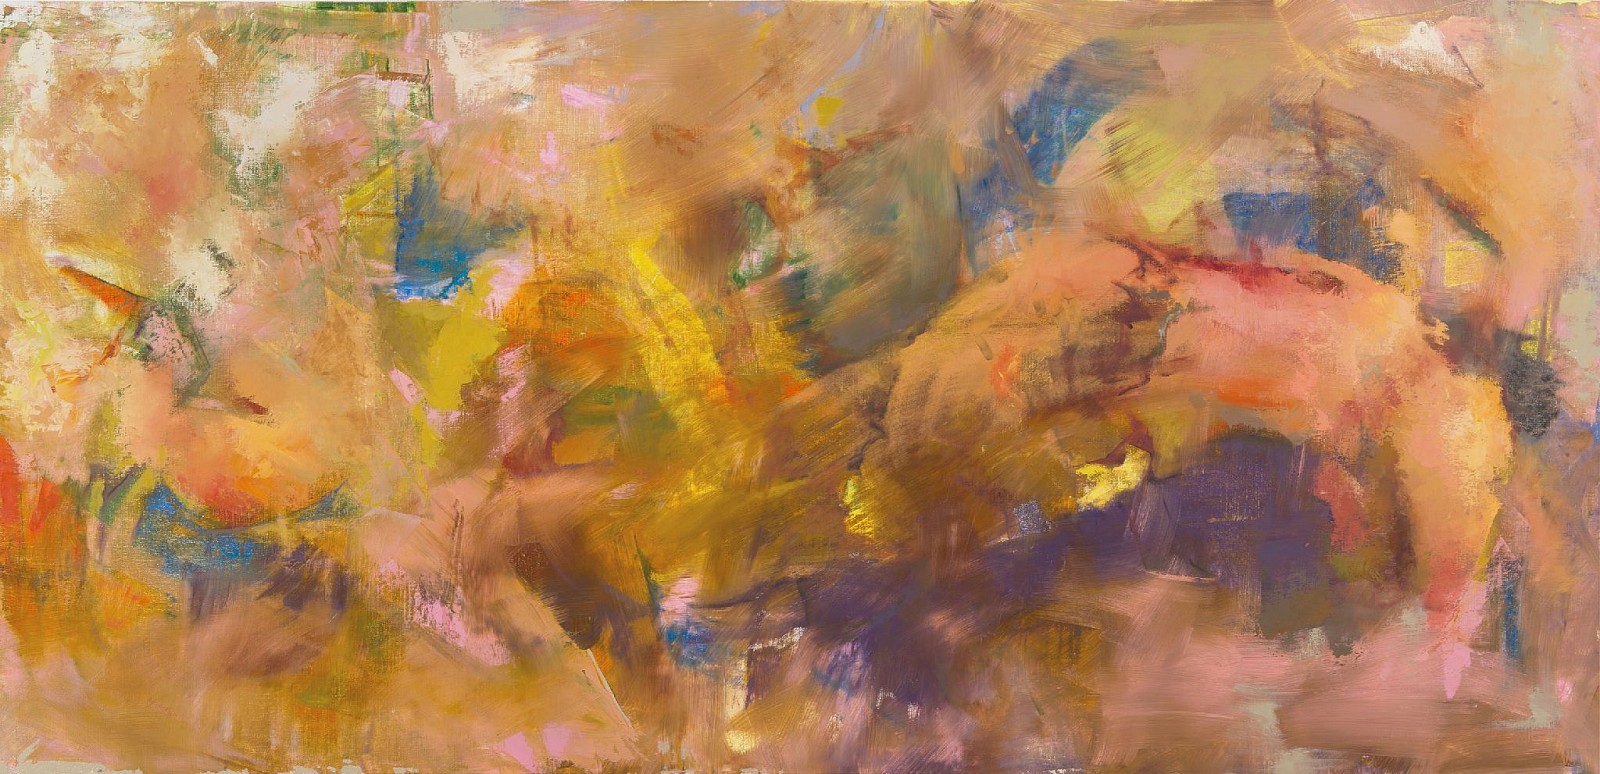 Beverly Barkat, #458
Oil on Canvas, 47 1/8 x 90 1/2 in.
BARK00015